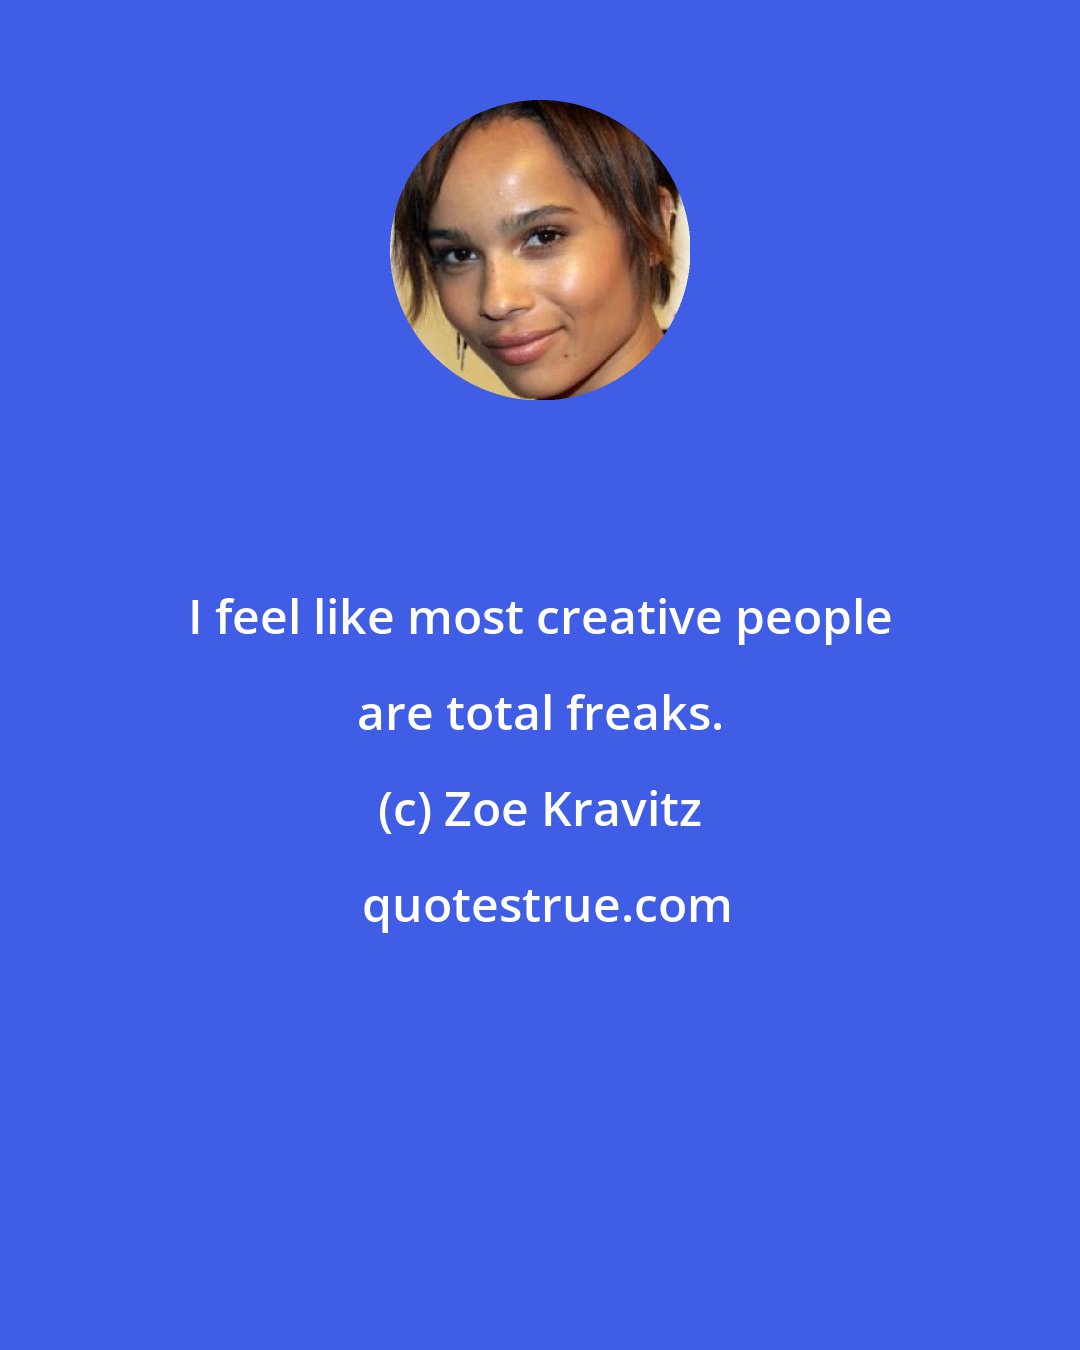 Zoe Kravitz: I feel like most creative people are total freaks.